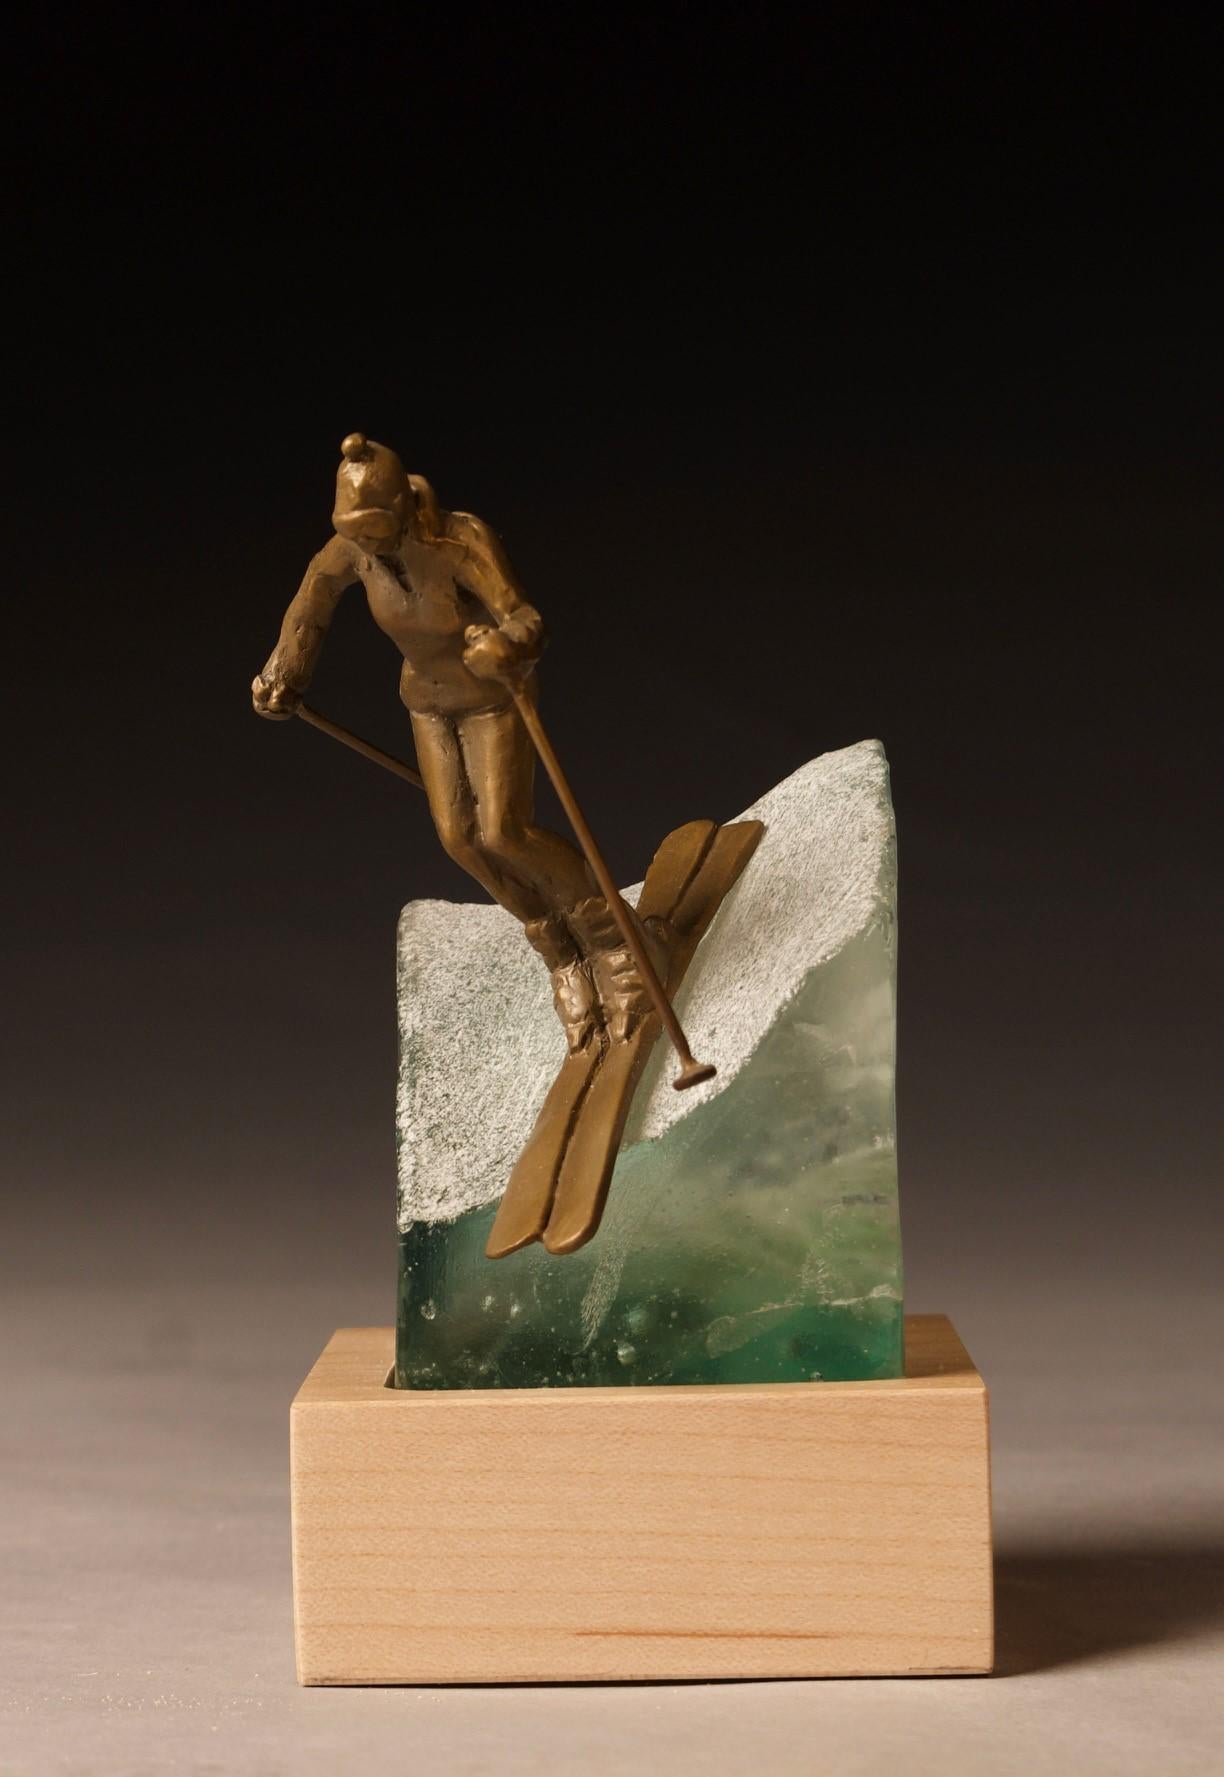 Clay Enoch Figurative Sculpture - Carver 6x3x3" bronze/glass sculpture